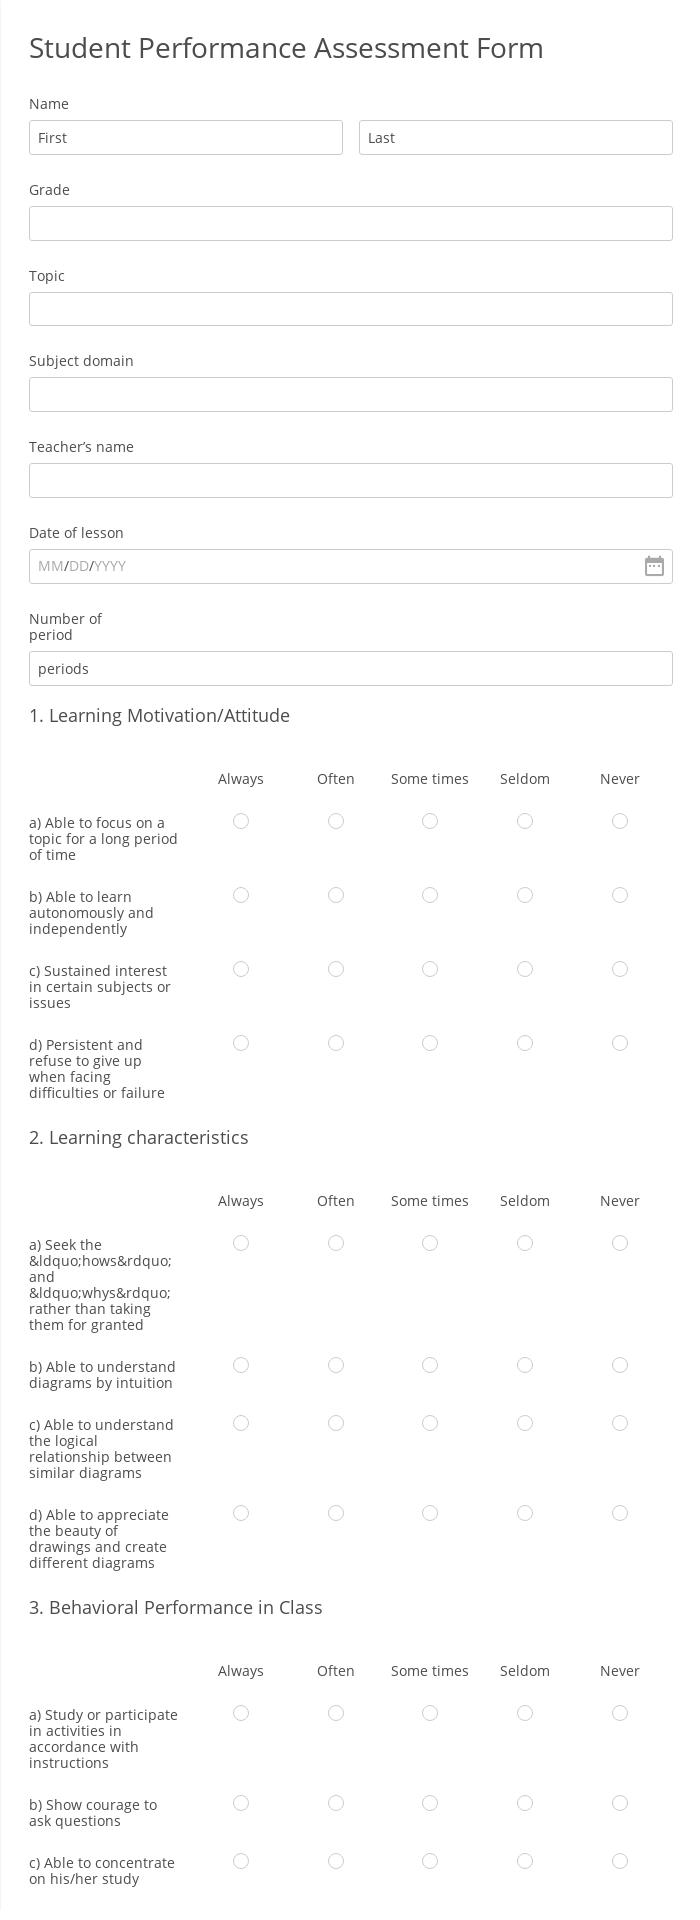 Student Performance Assessment Form